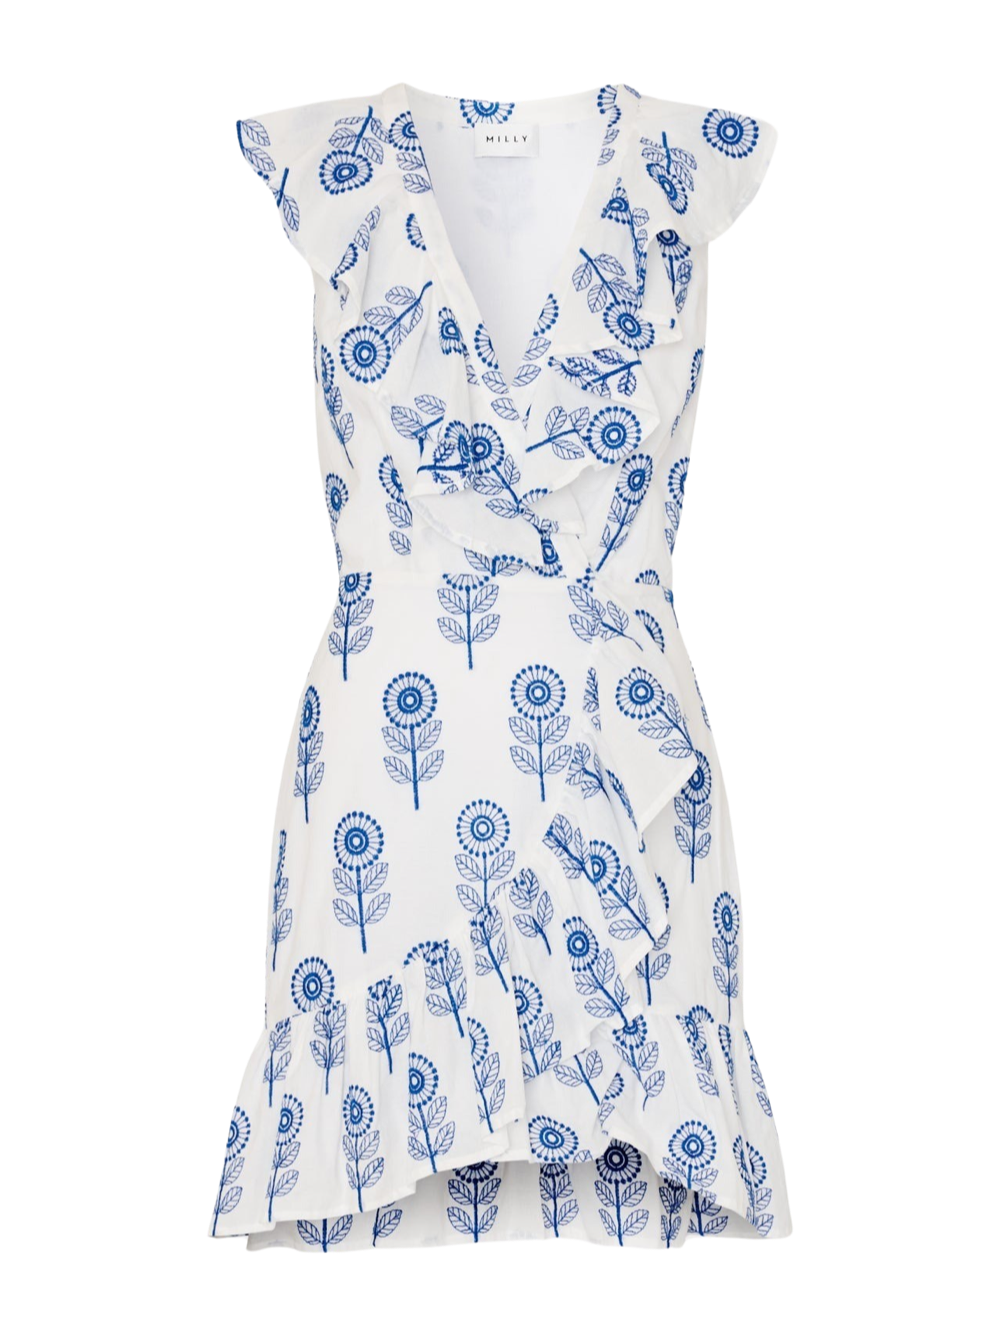 Milly Novi Poppy Embroidery Wrap Dress in White/Blue